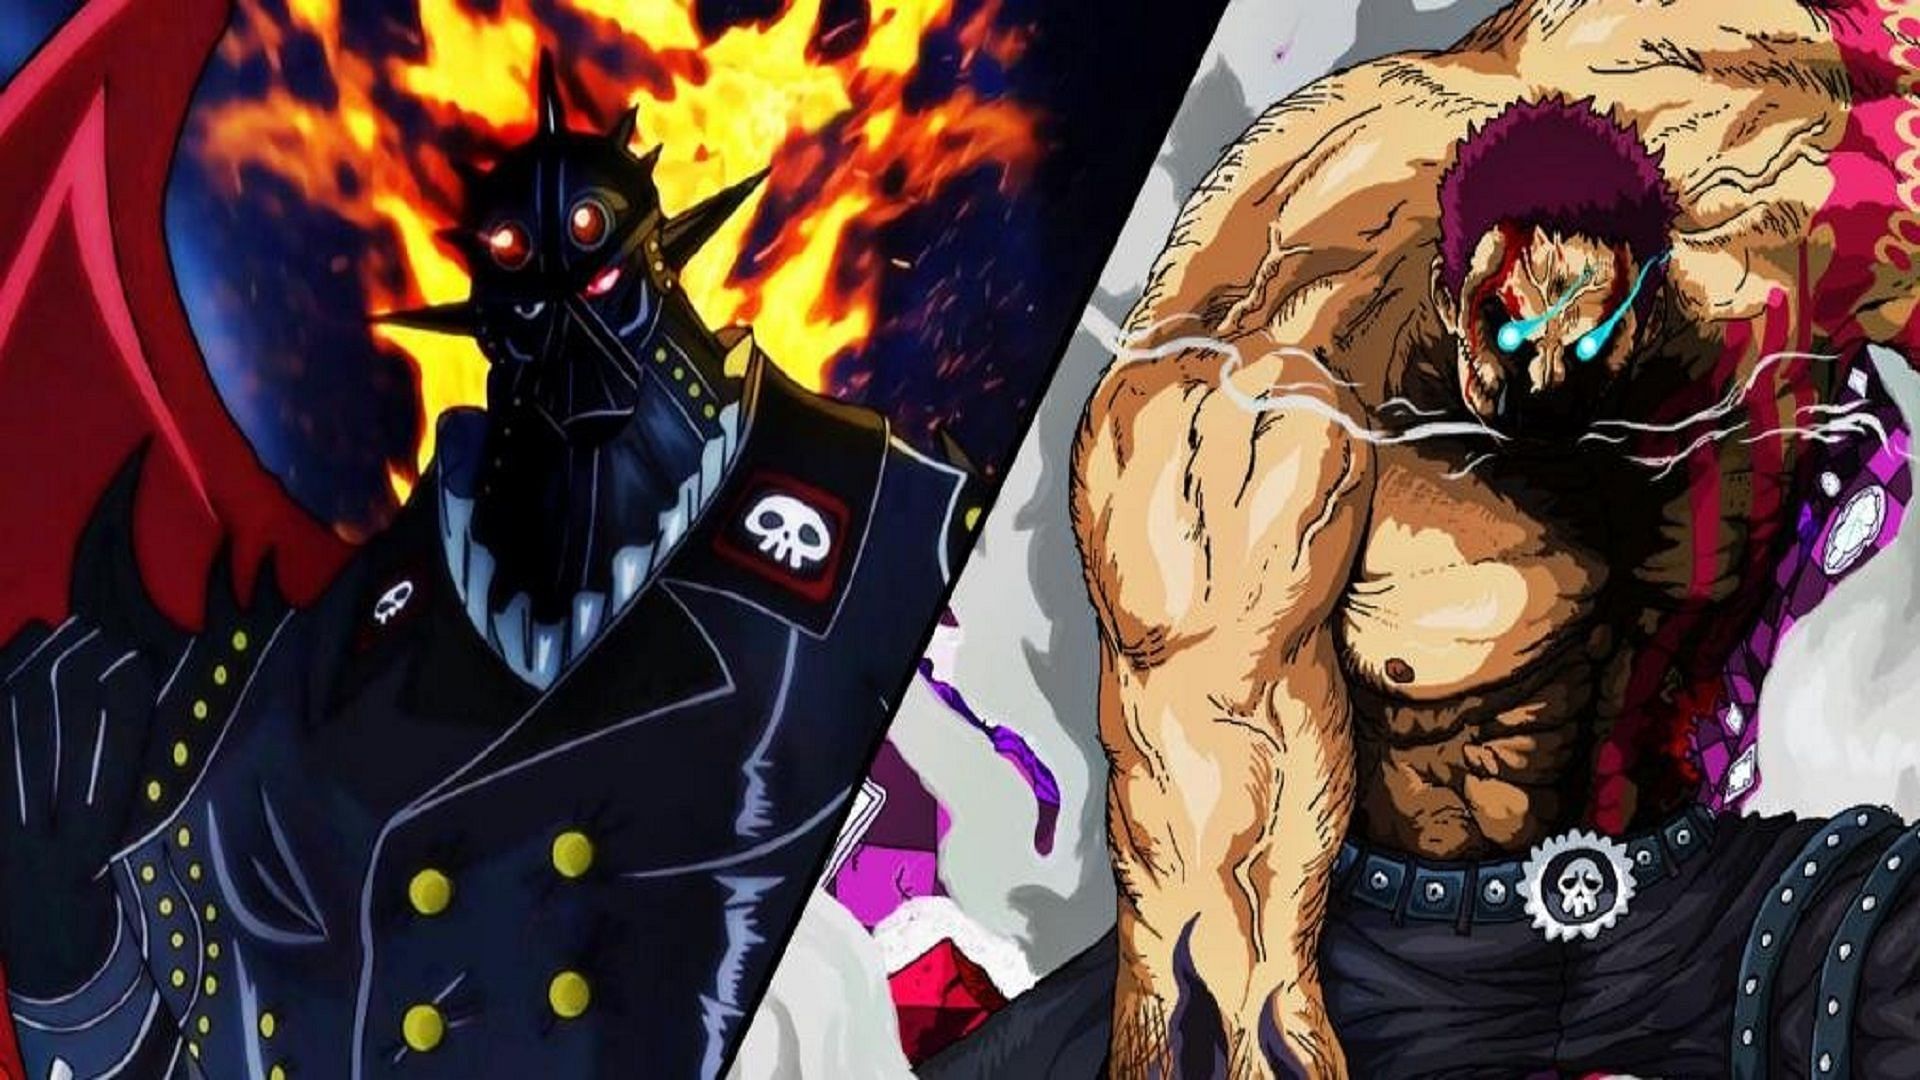 Comparing their feats throughout One Piece, King appears to be stronger than Katakuri (Image via Eiichiro Oda/Shueisha, One Piece)